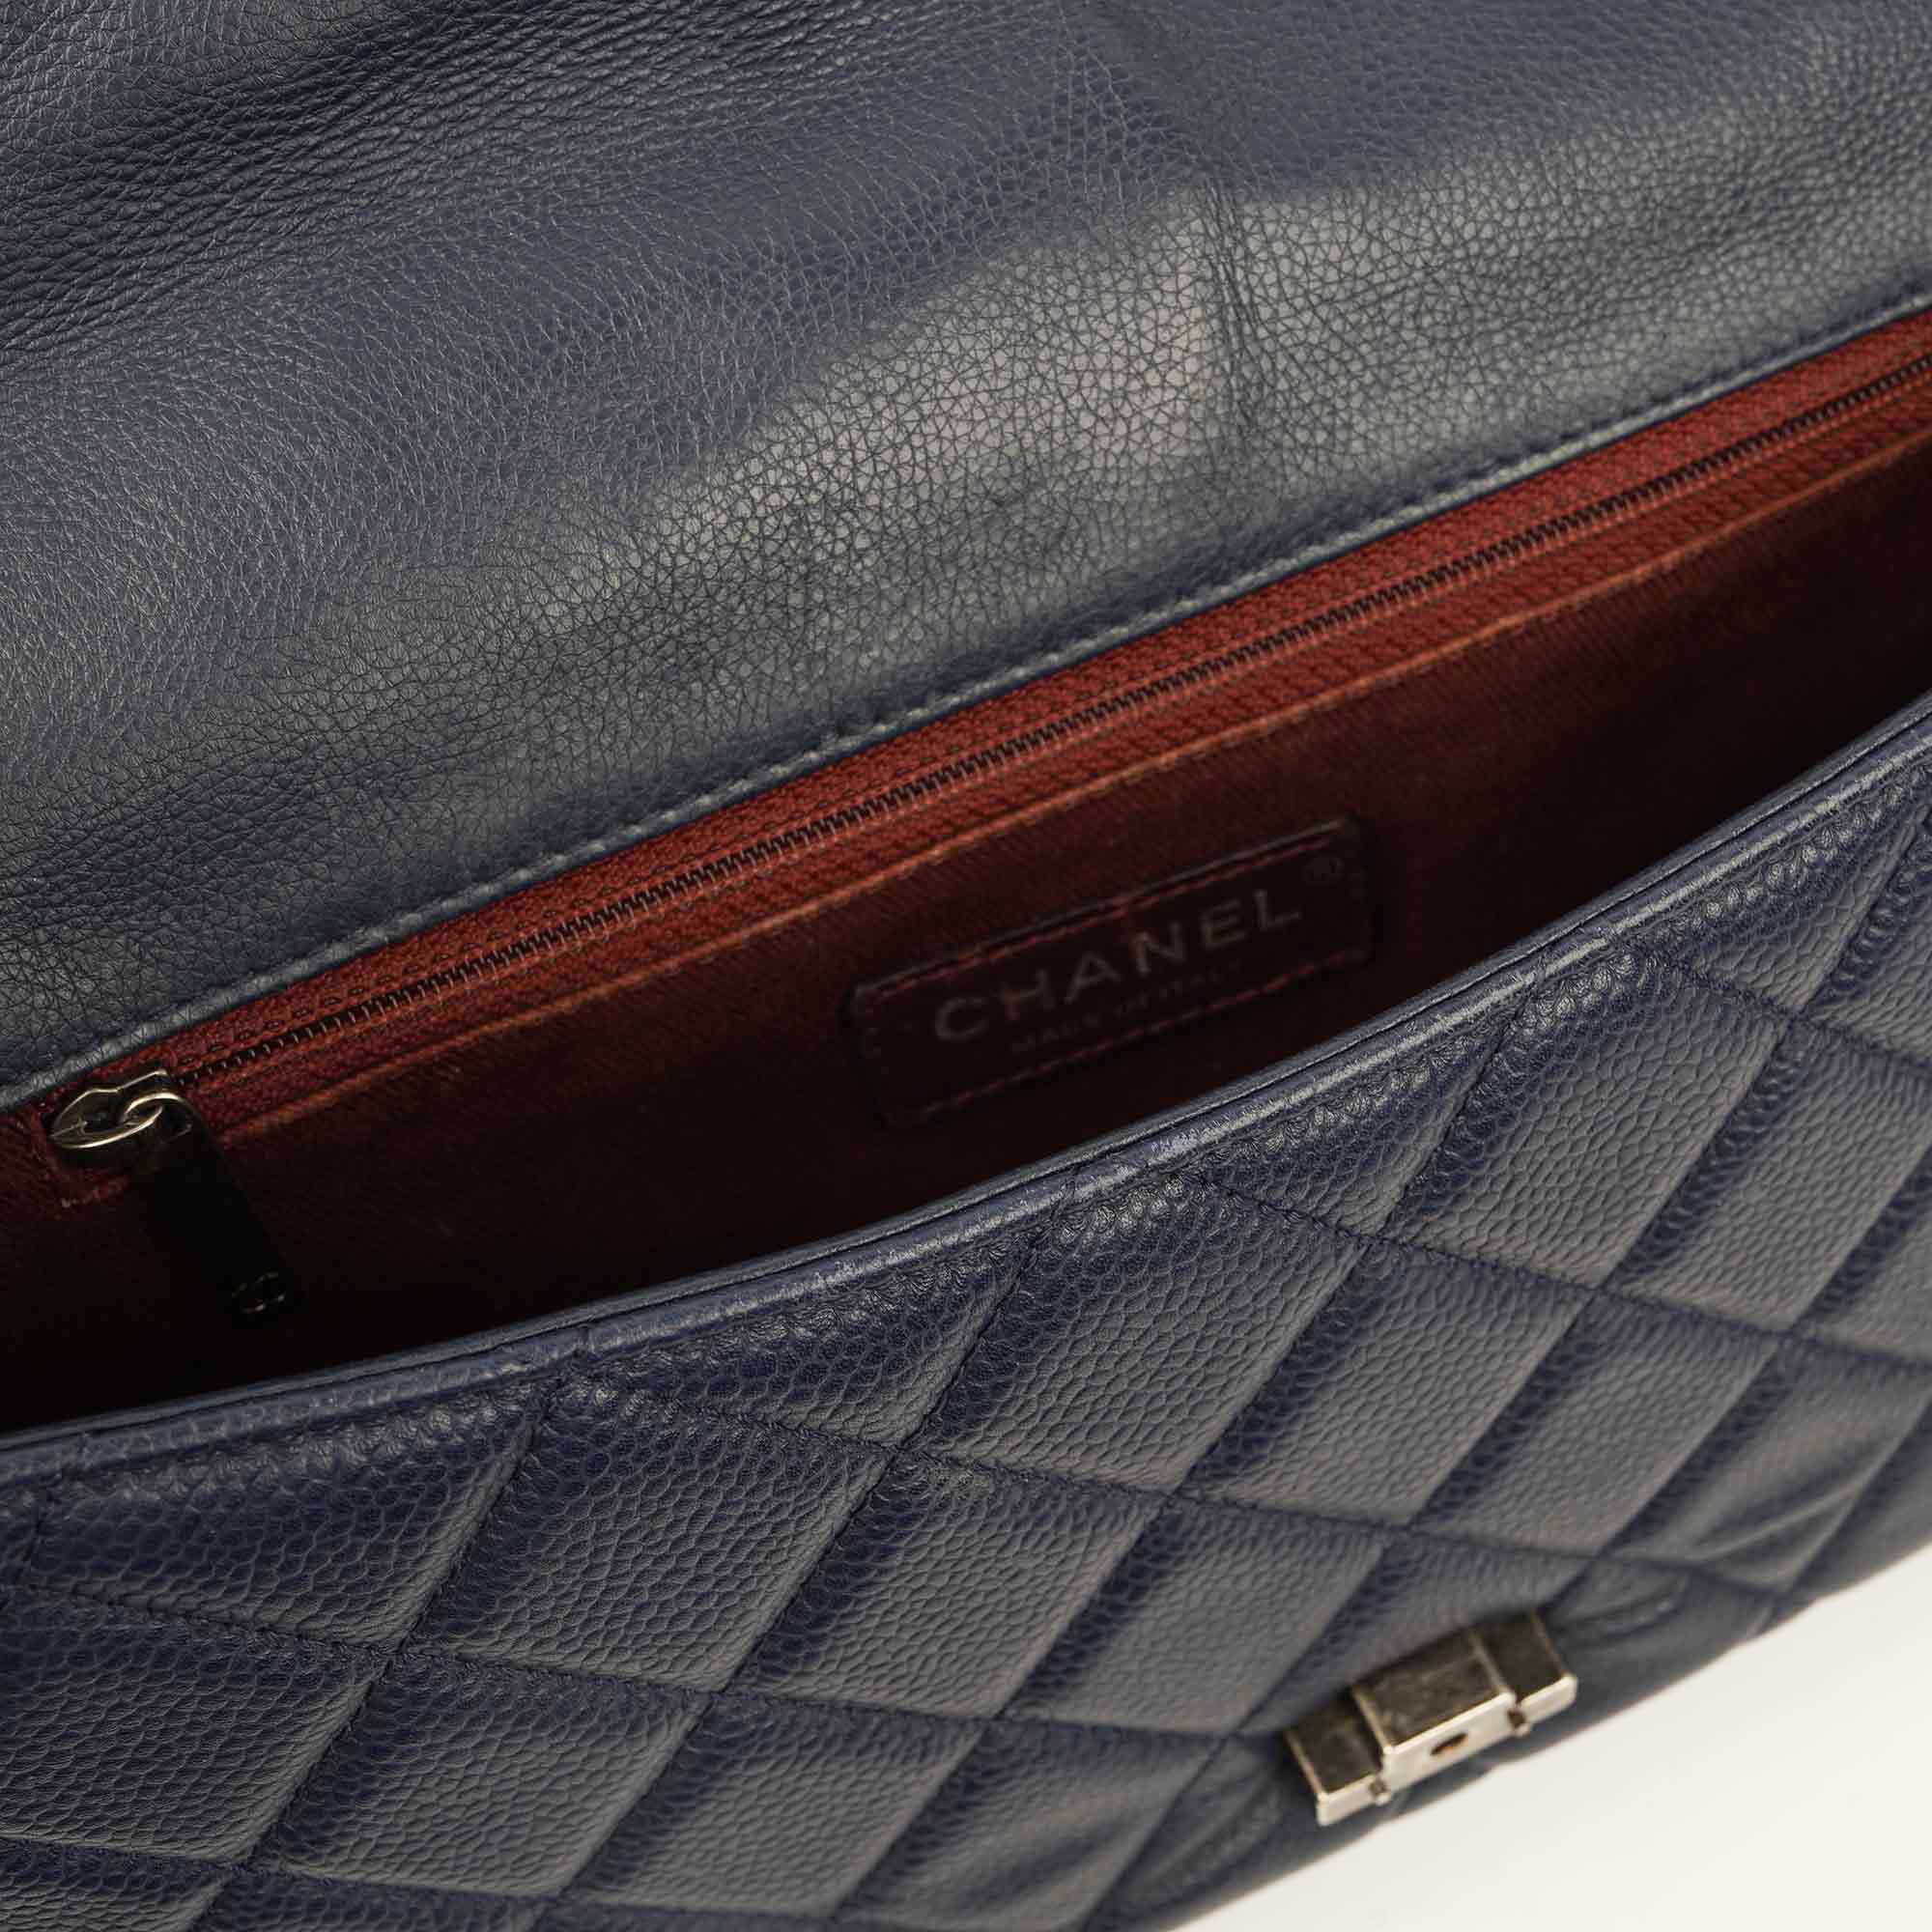 Large Flap Bag - CHANEL - Affordable Luxury image